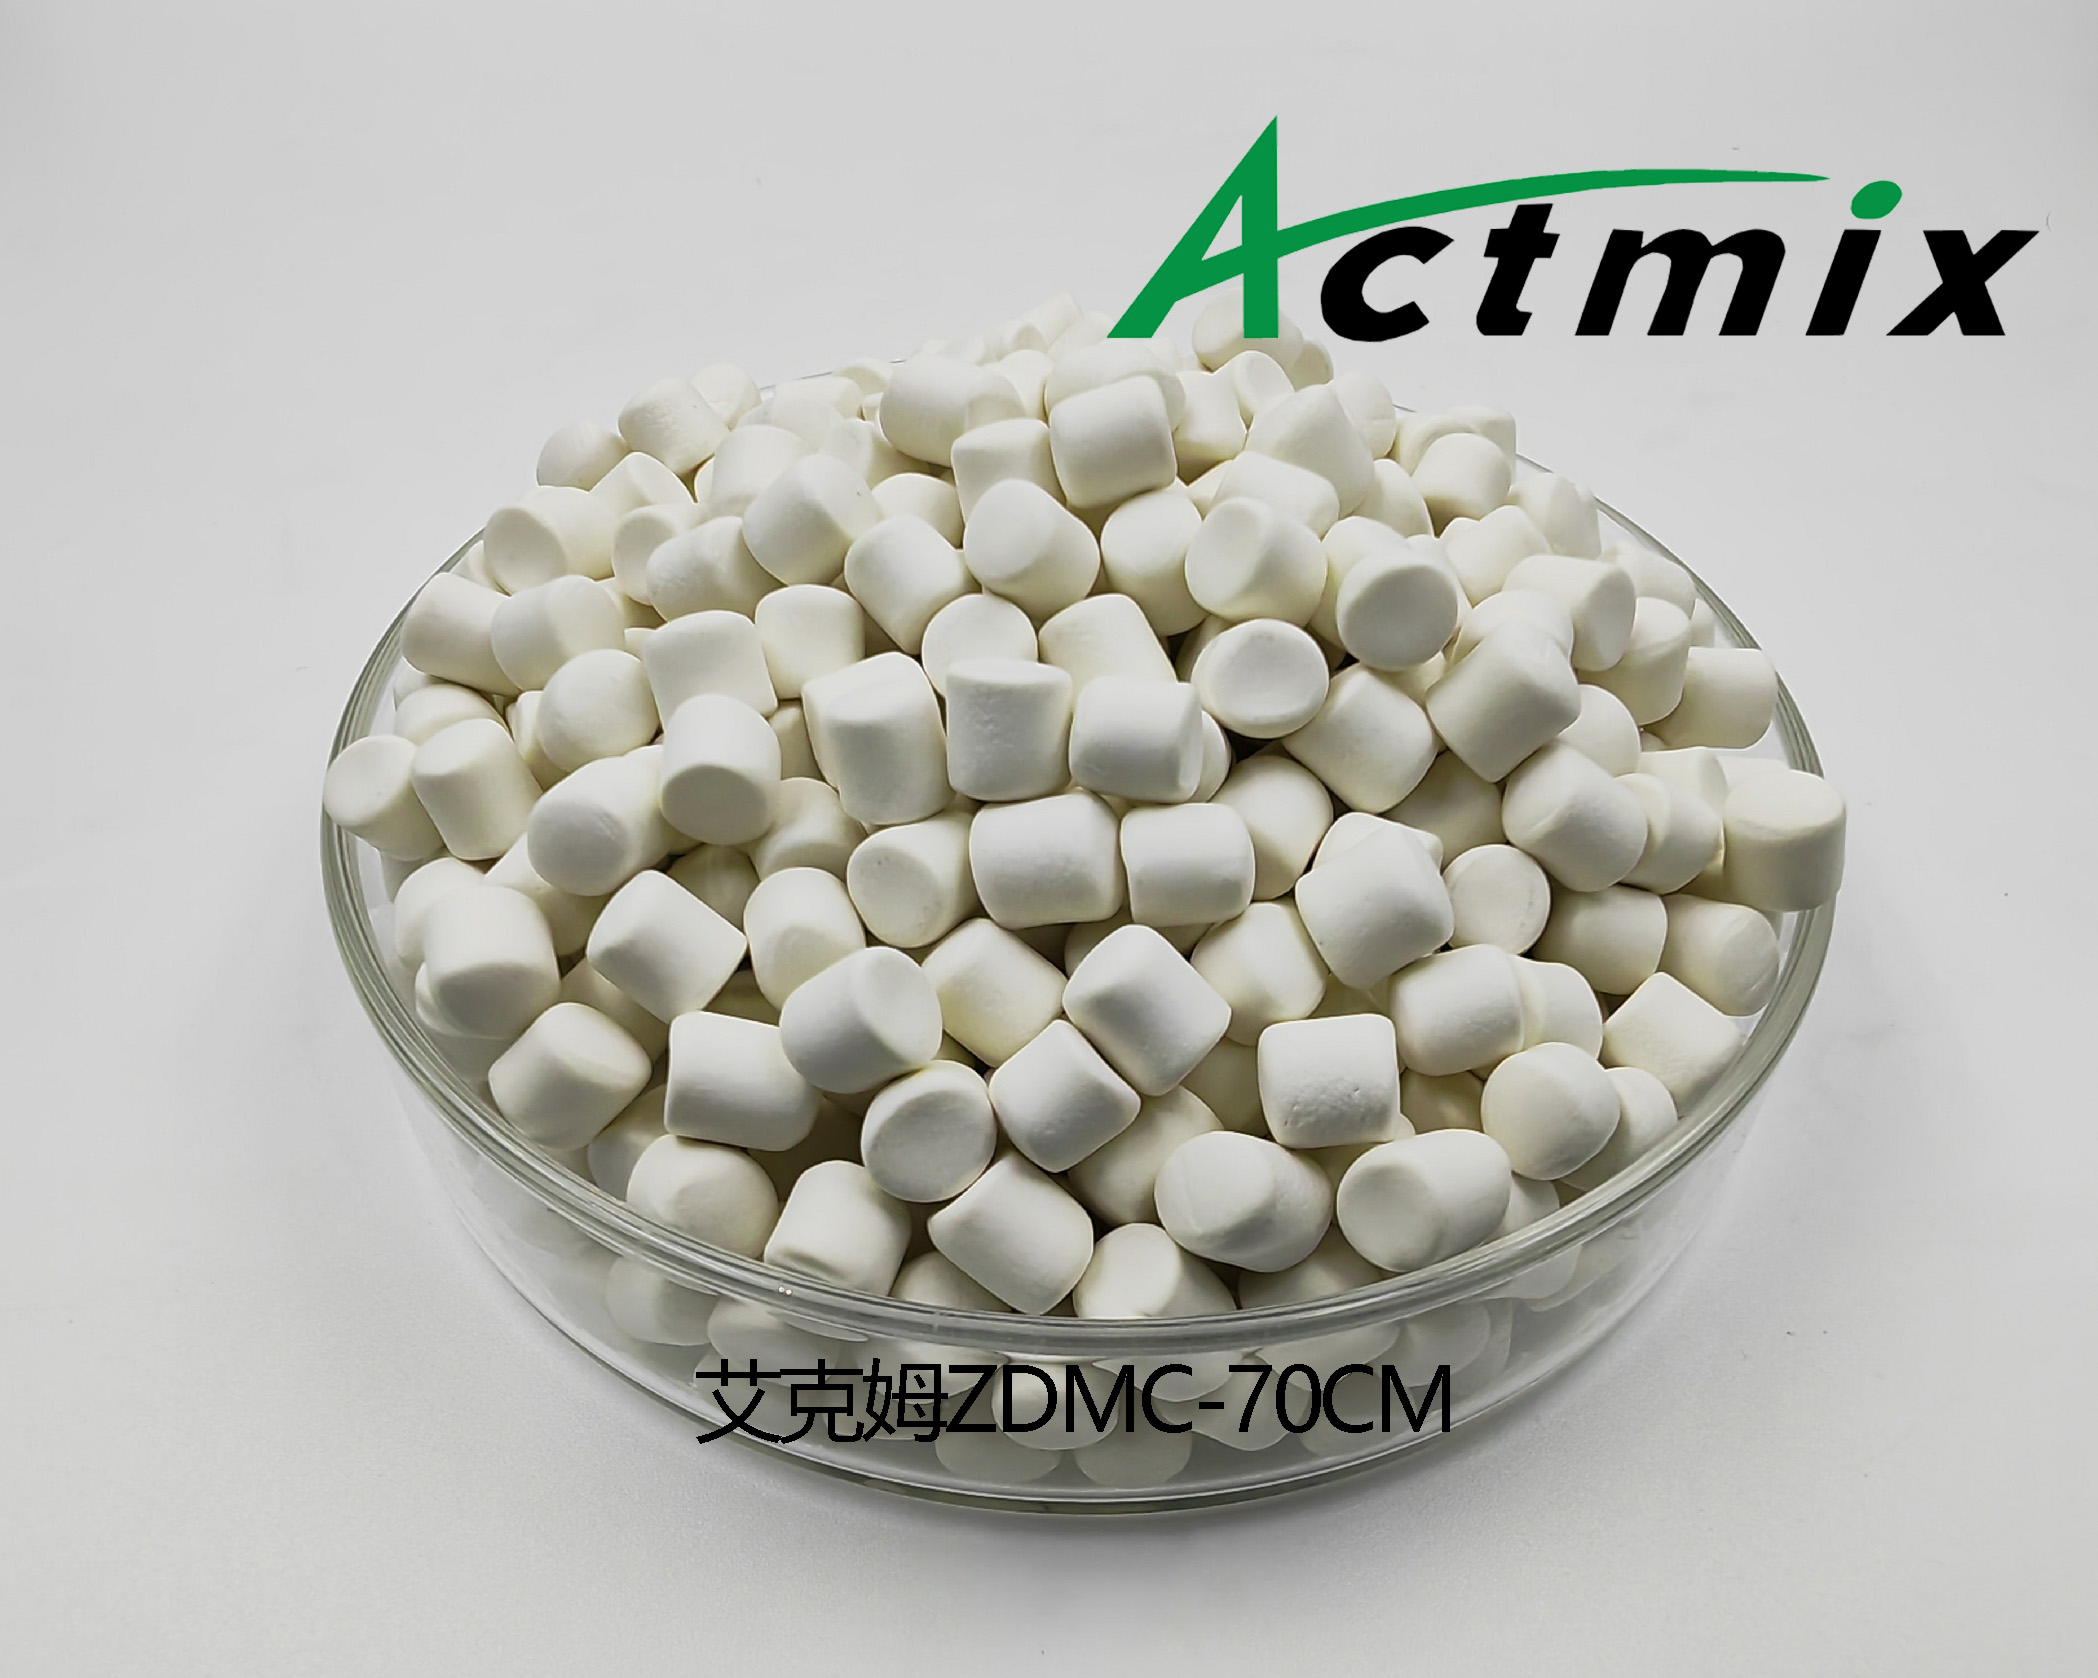 Actmix ZDMC-70CM